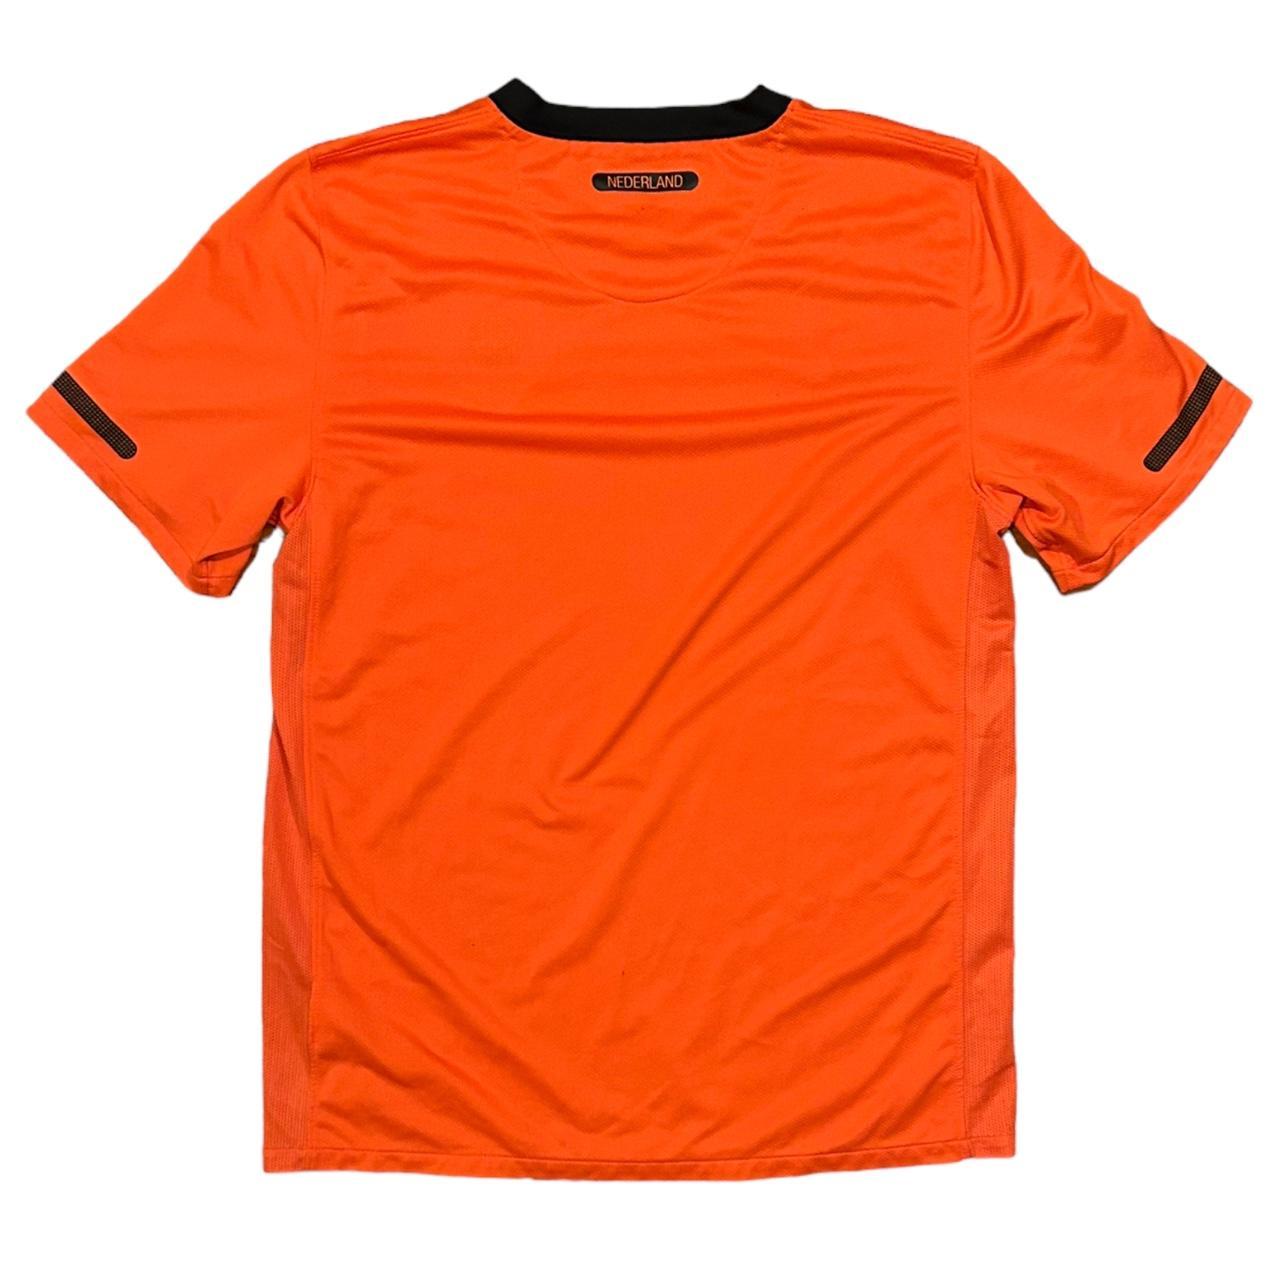 Nike Men's Orange and Black Shirt | Depop